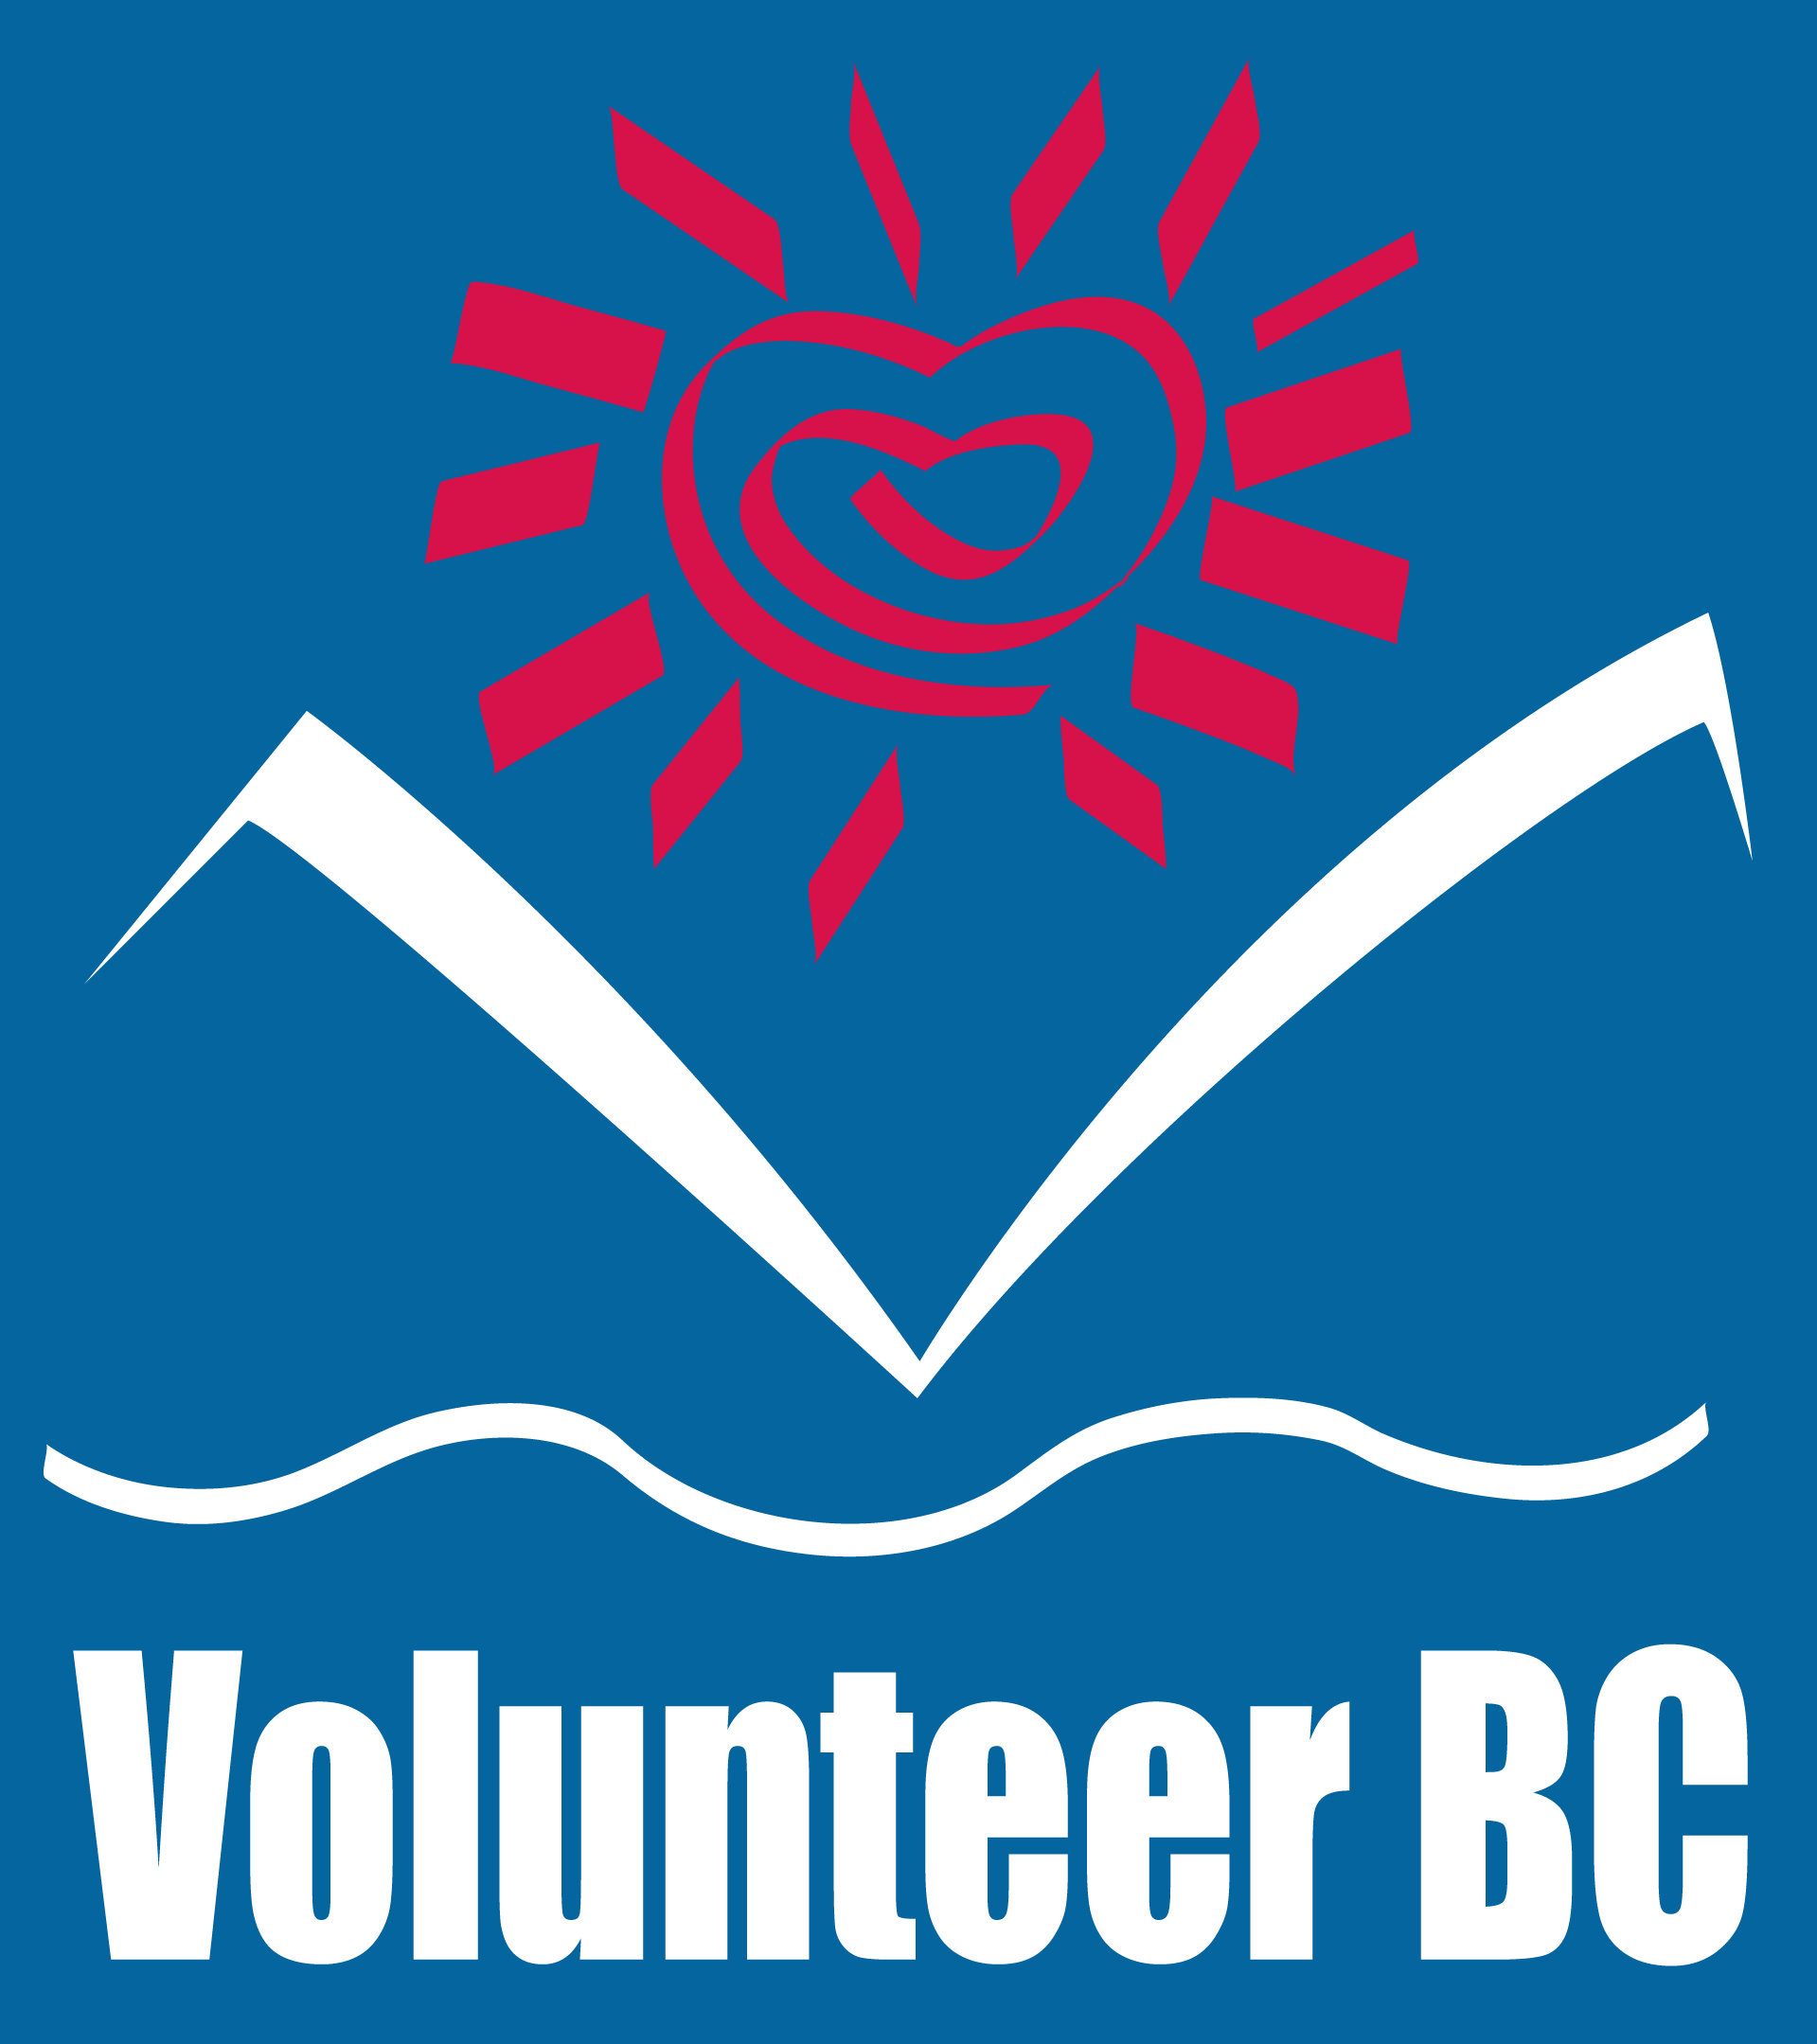 Volunteer BC